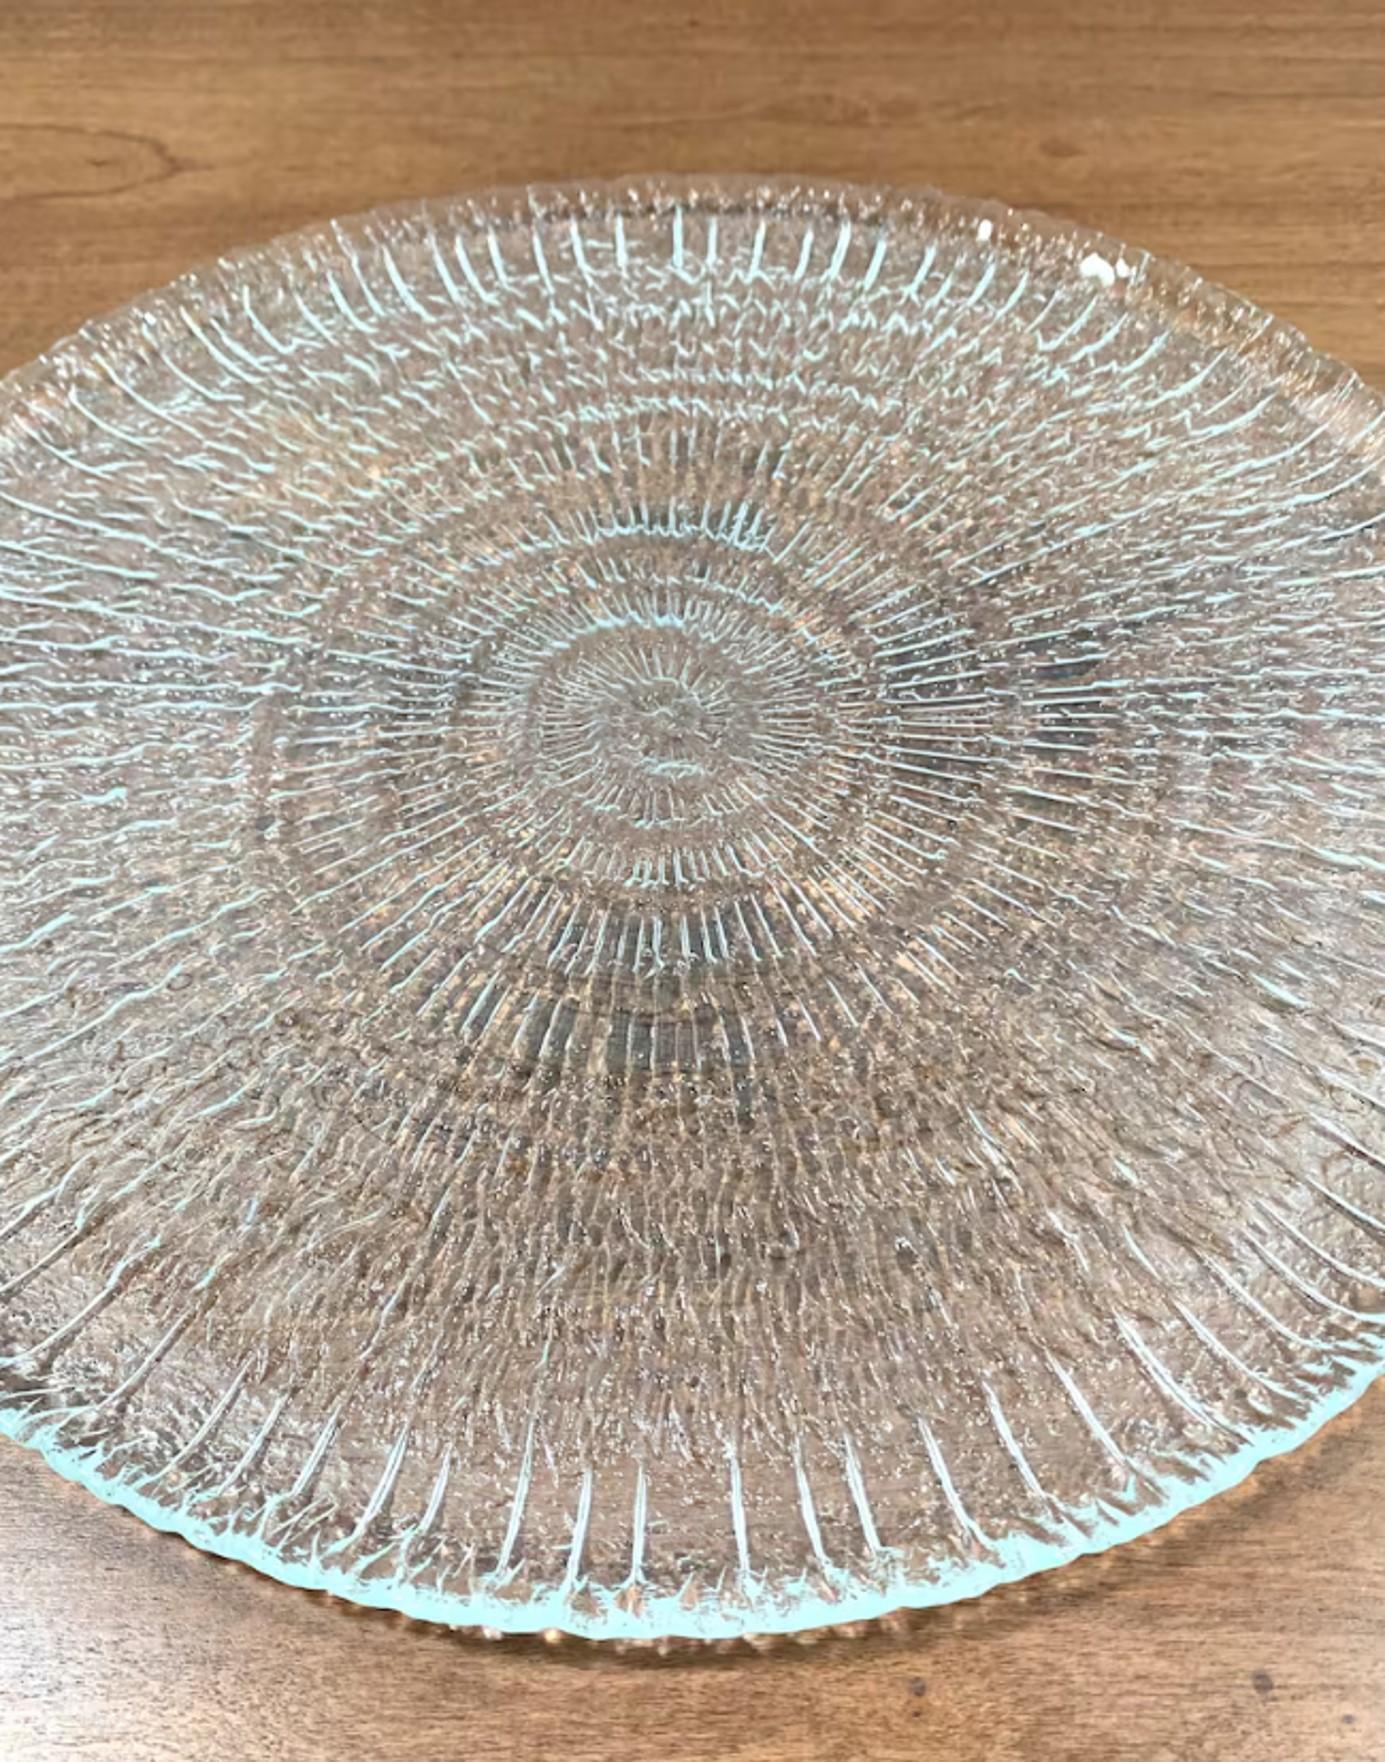 Large Vintage Textured Glass Platter with Spiral Pattern 1